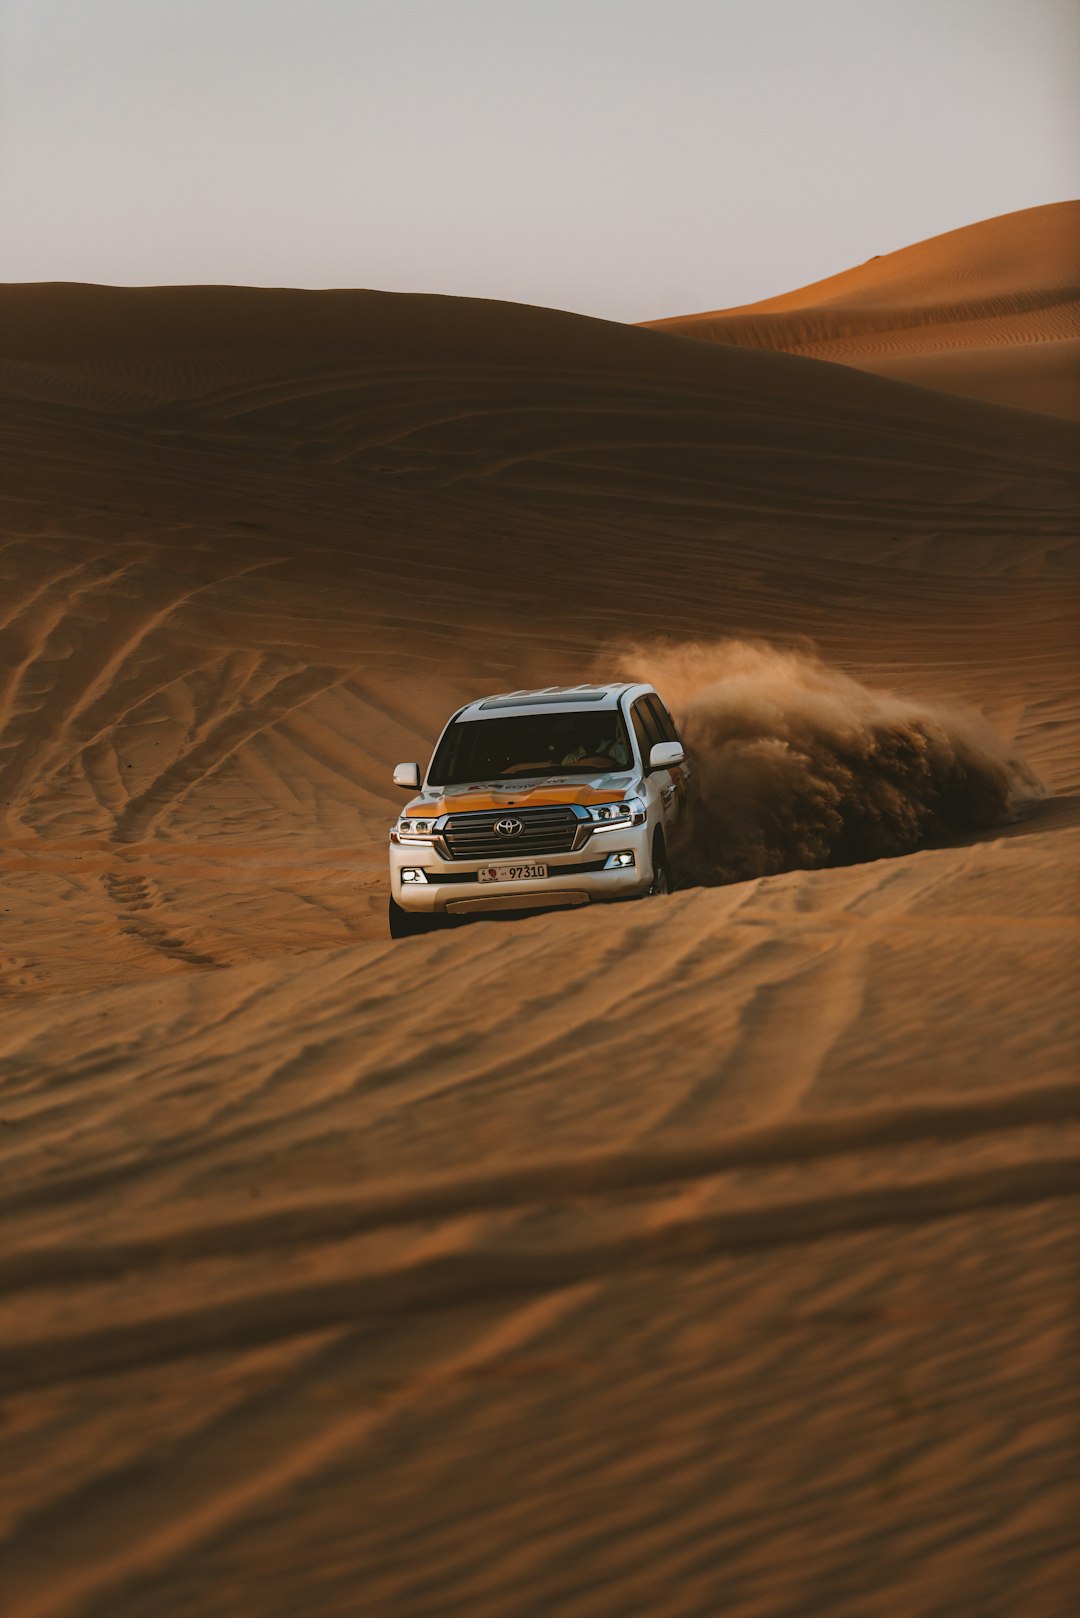 Desert racing photo spot Abu Dhabi Abu Dhabi